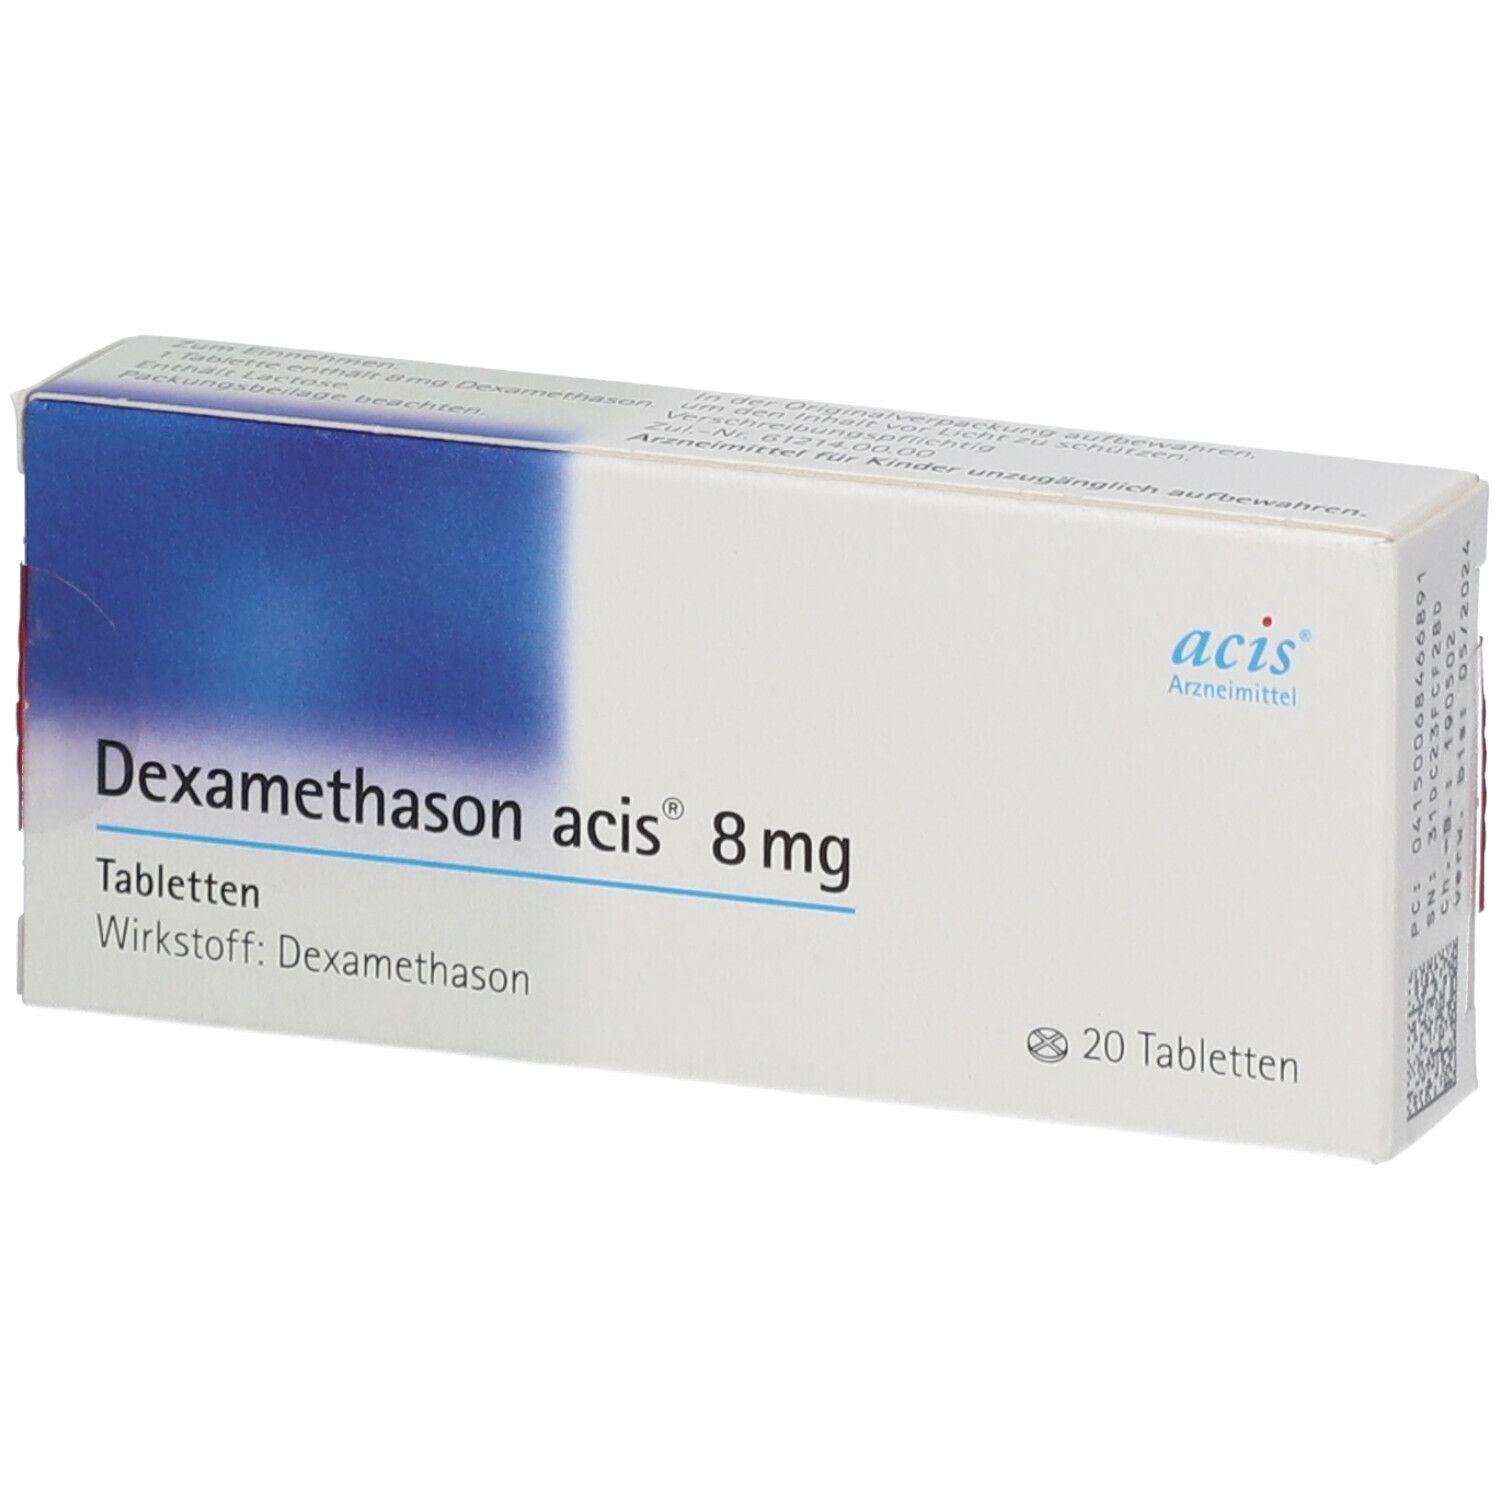 Dexamethason acis® 8 mg